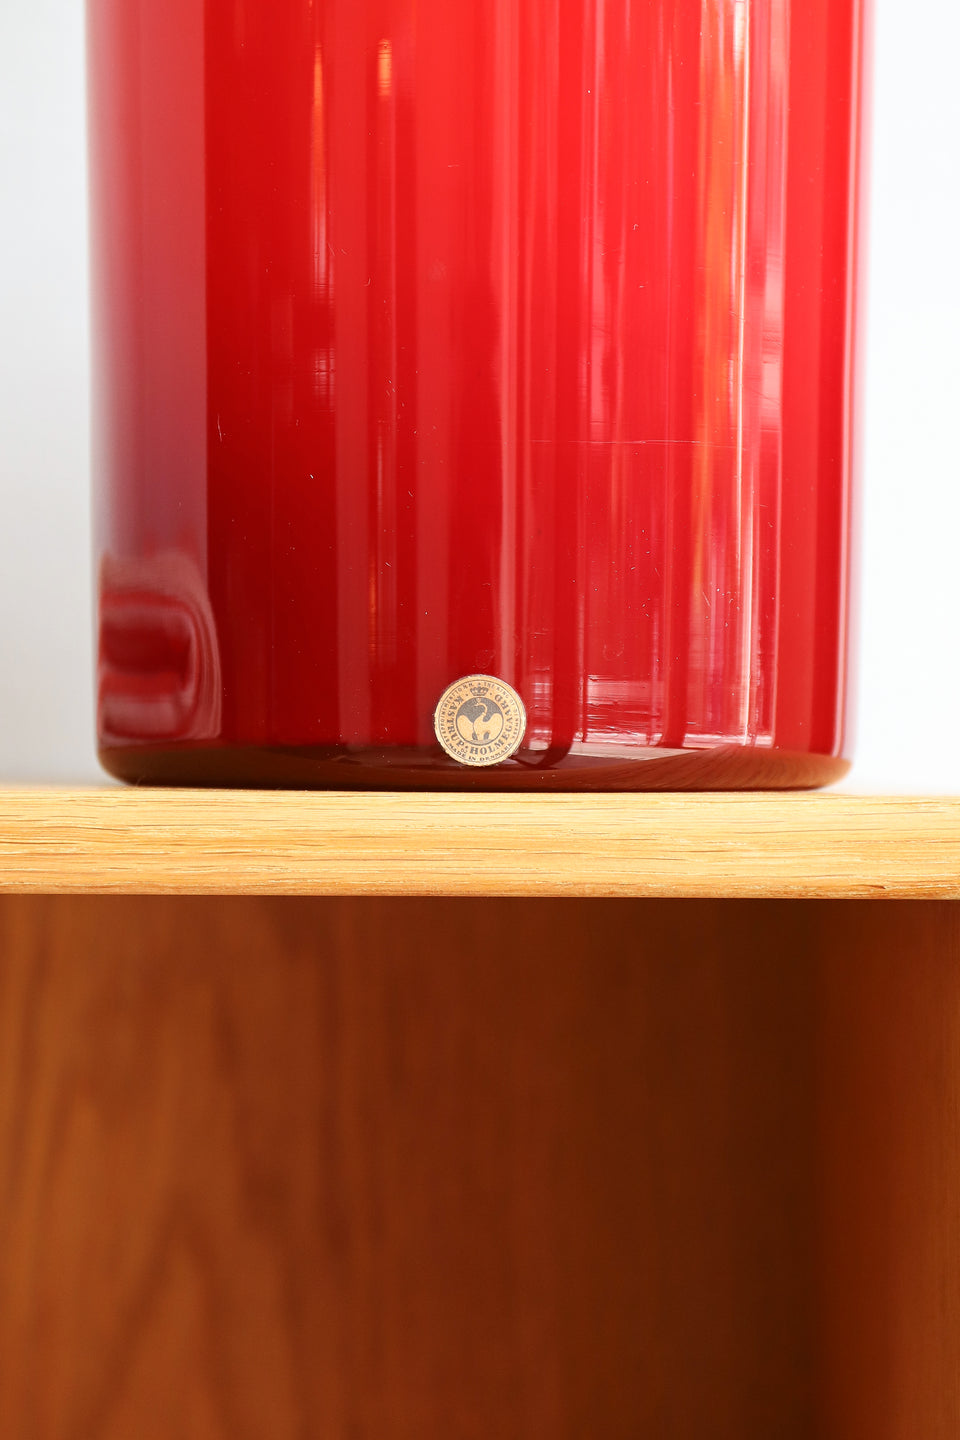 Holmegaard Gul Vase Red Danish Vintage/ホルムガード ガルベース ガラス 花瓶 デンマーク 北欧ヴィンテージ